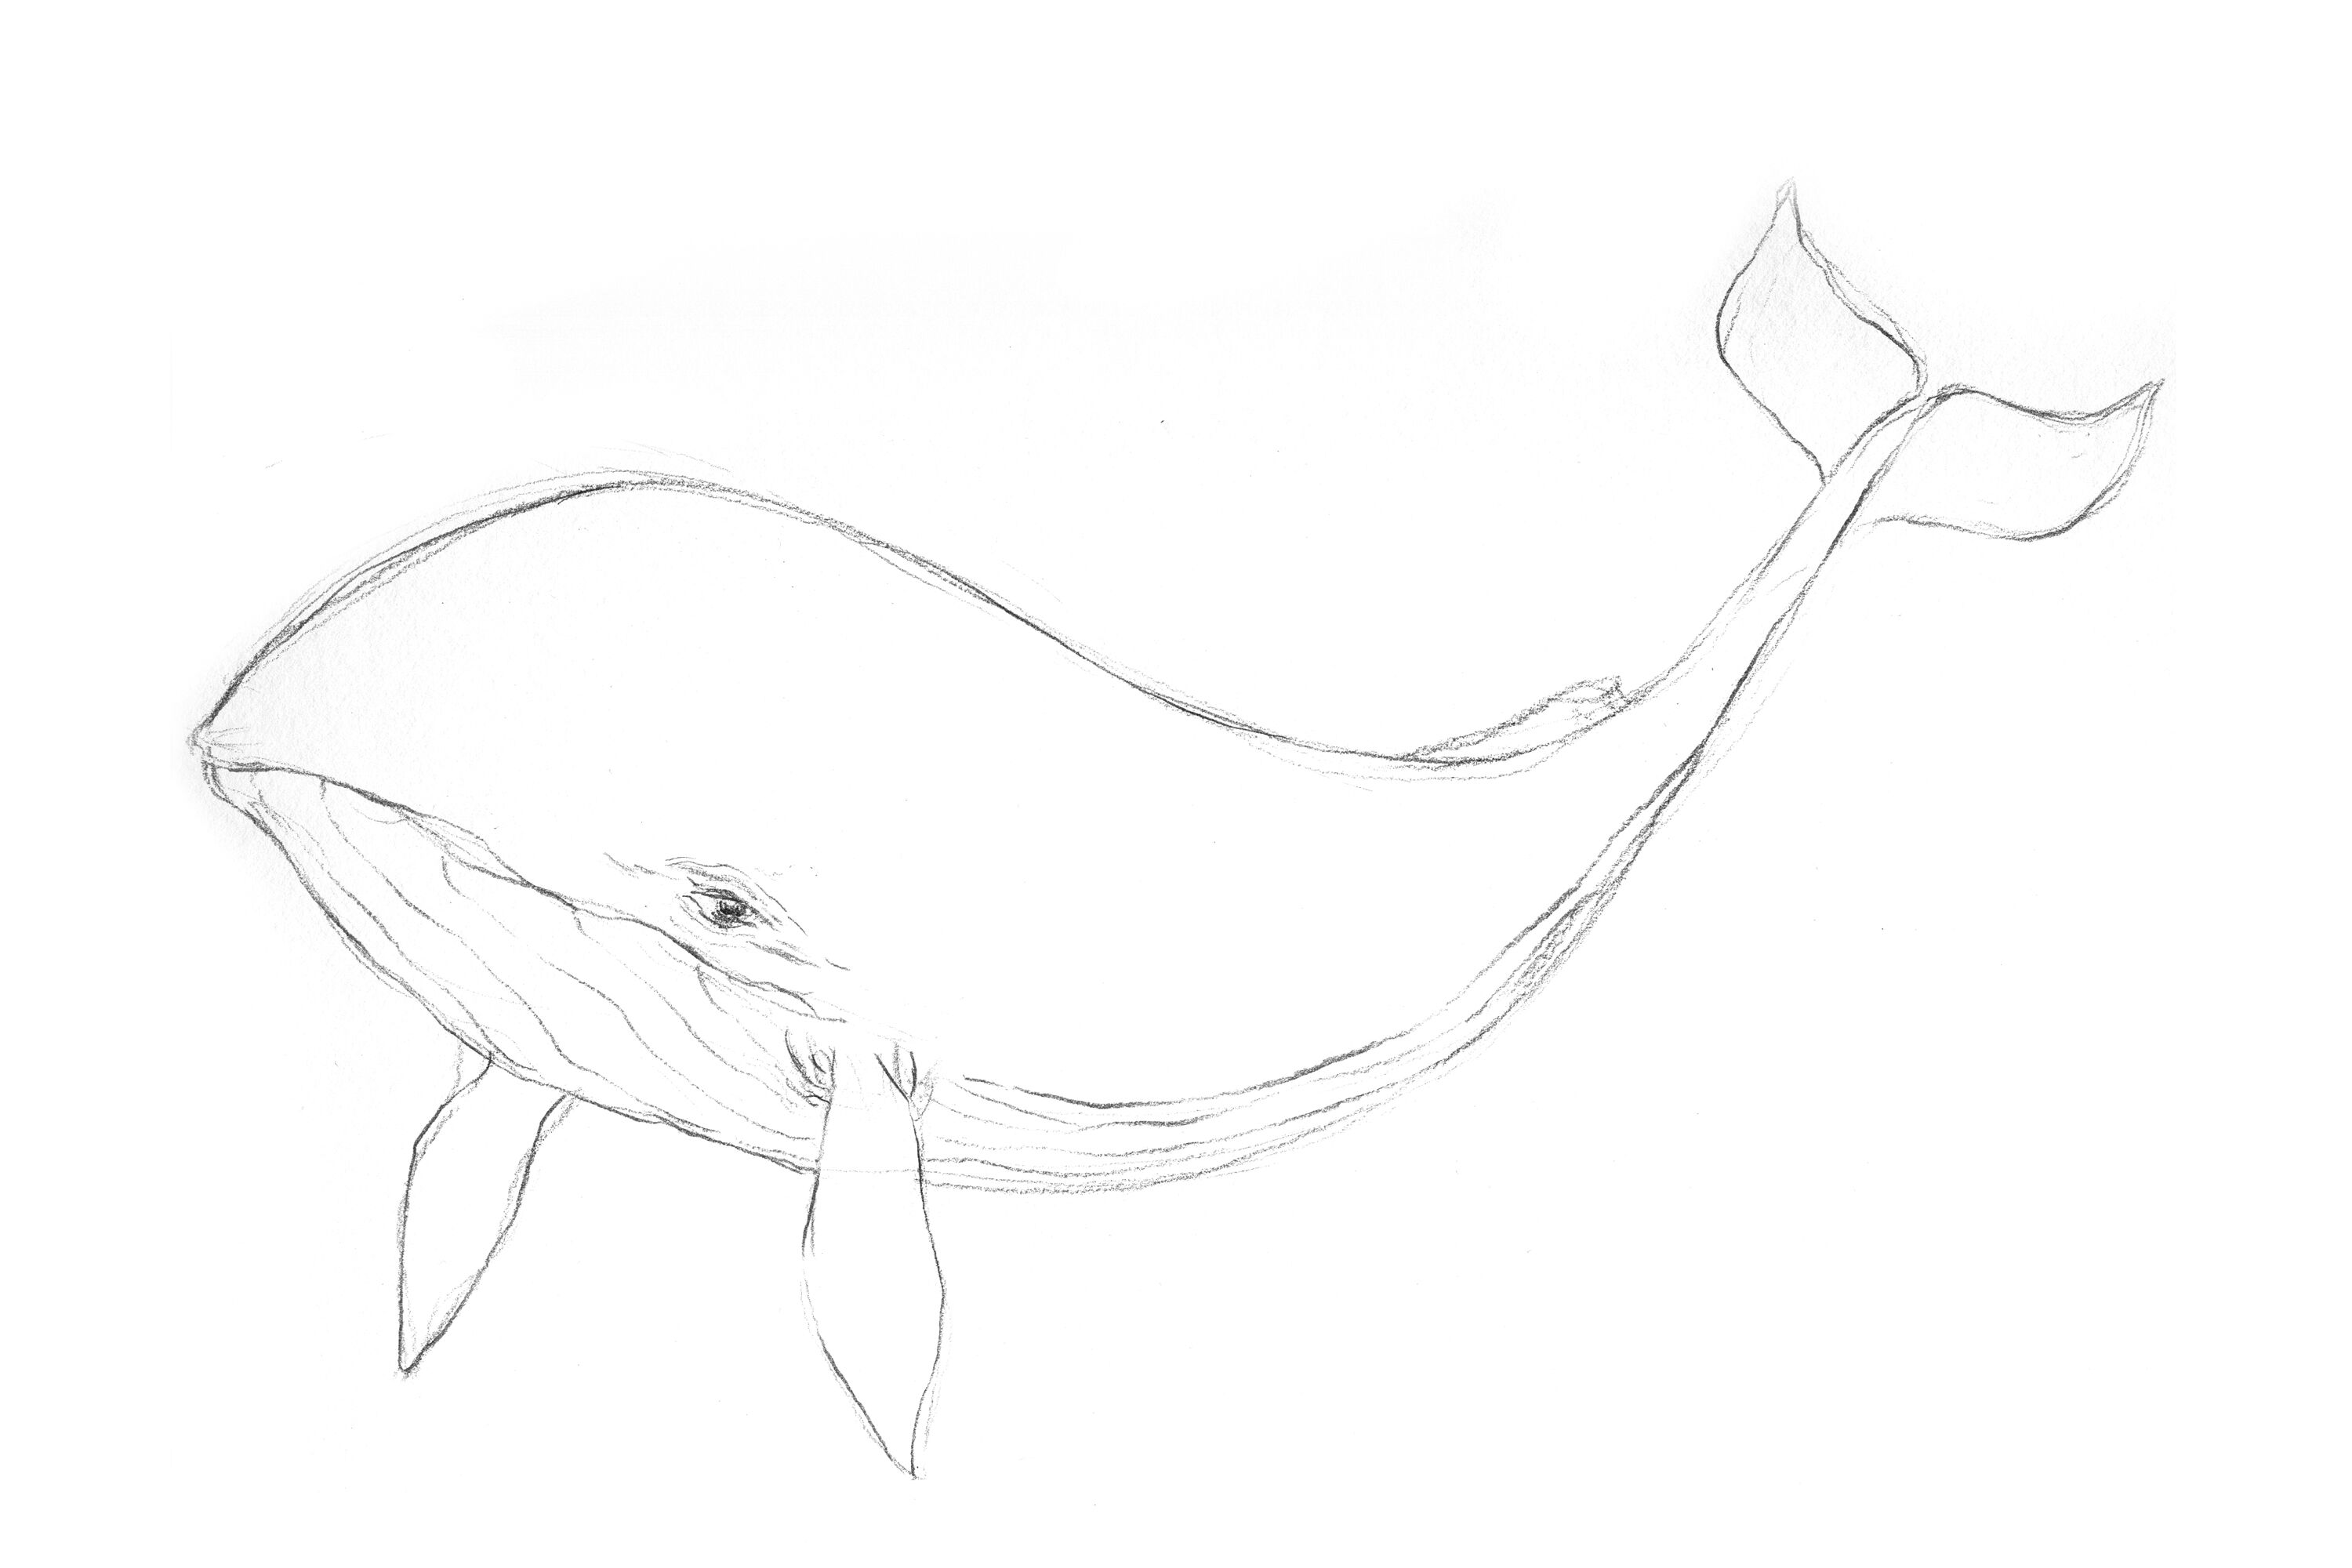 Watercolour brush pen whale